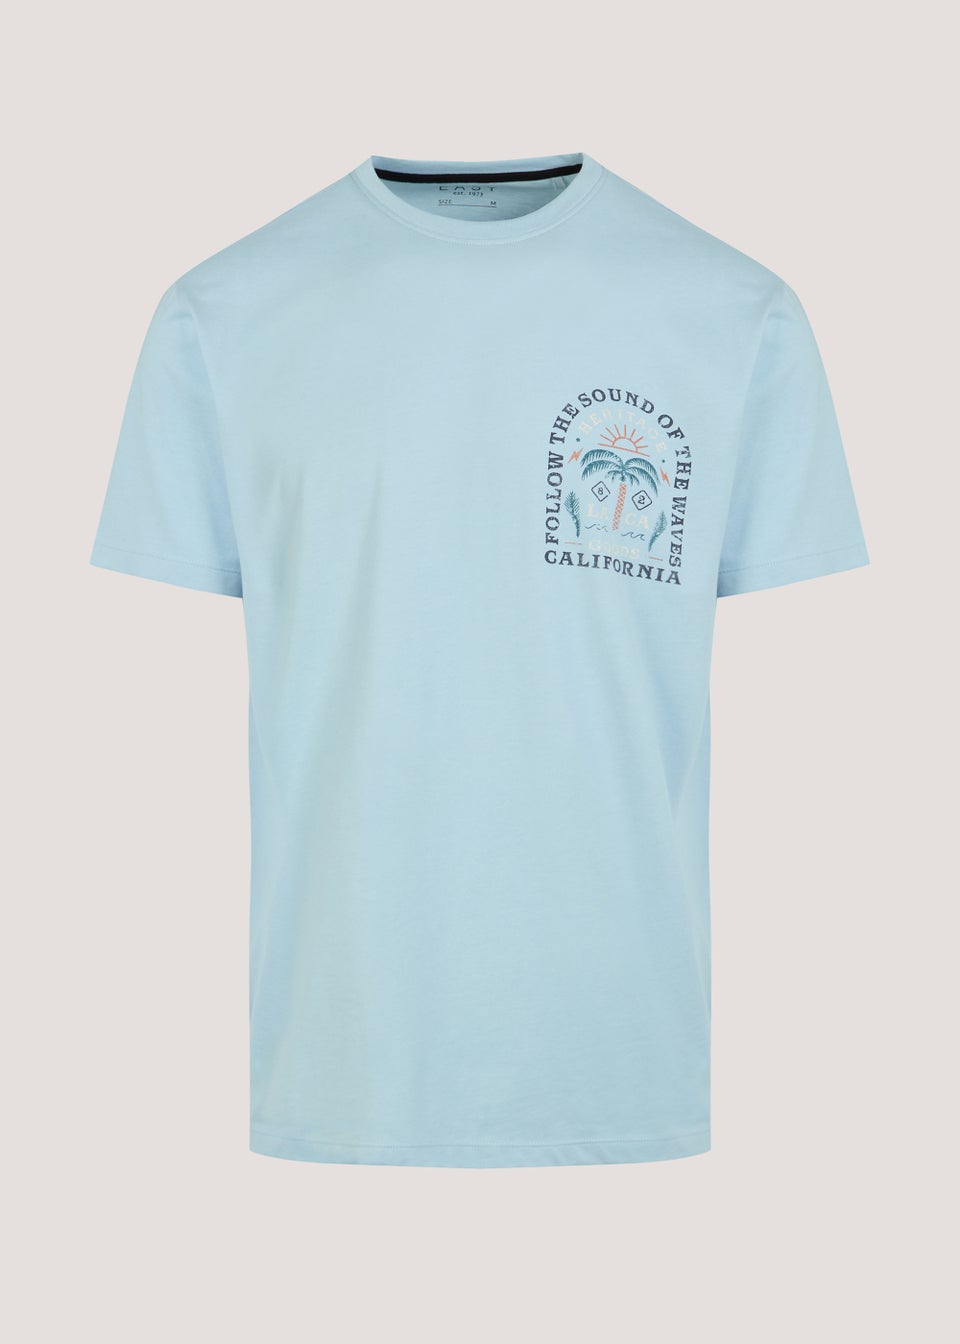 Blue California Palm Tree Print T-Shirt - Matalan